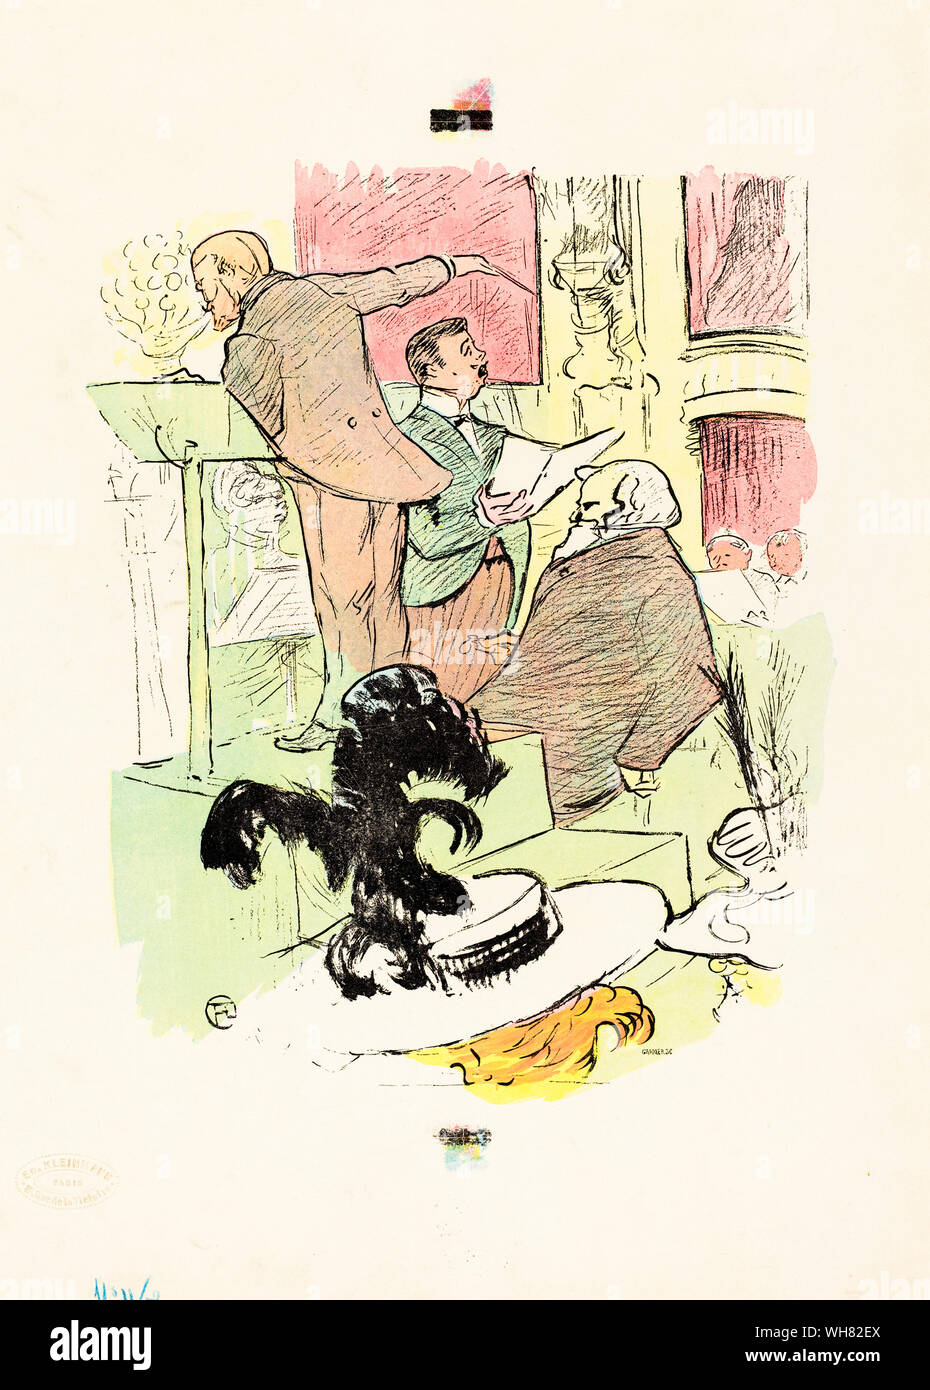 Henri de Toulouse Lautrec, Les Grands Concerts de l'Opera, impresión, 1895 Foto de stock